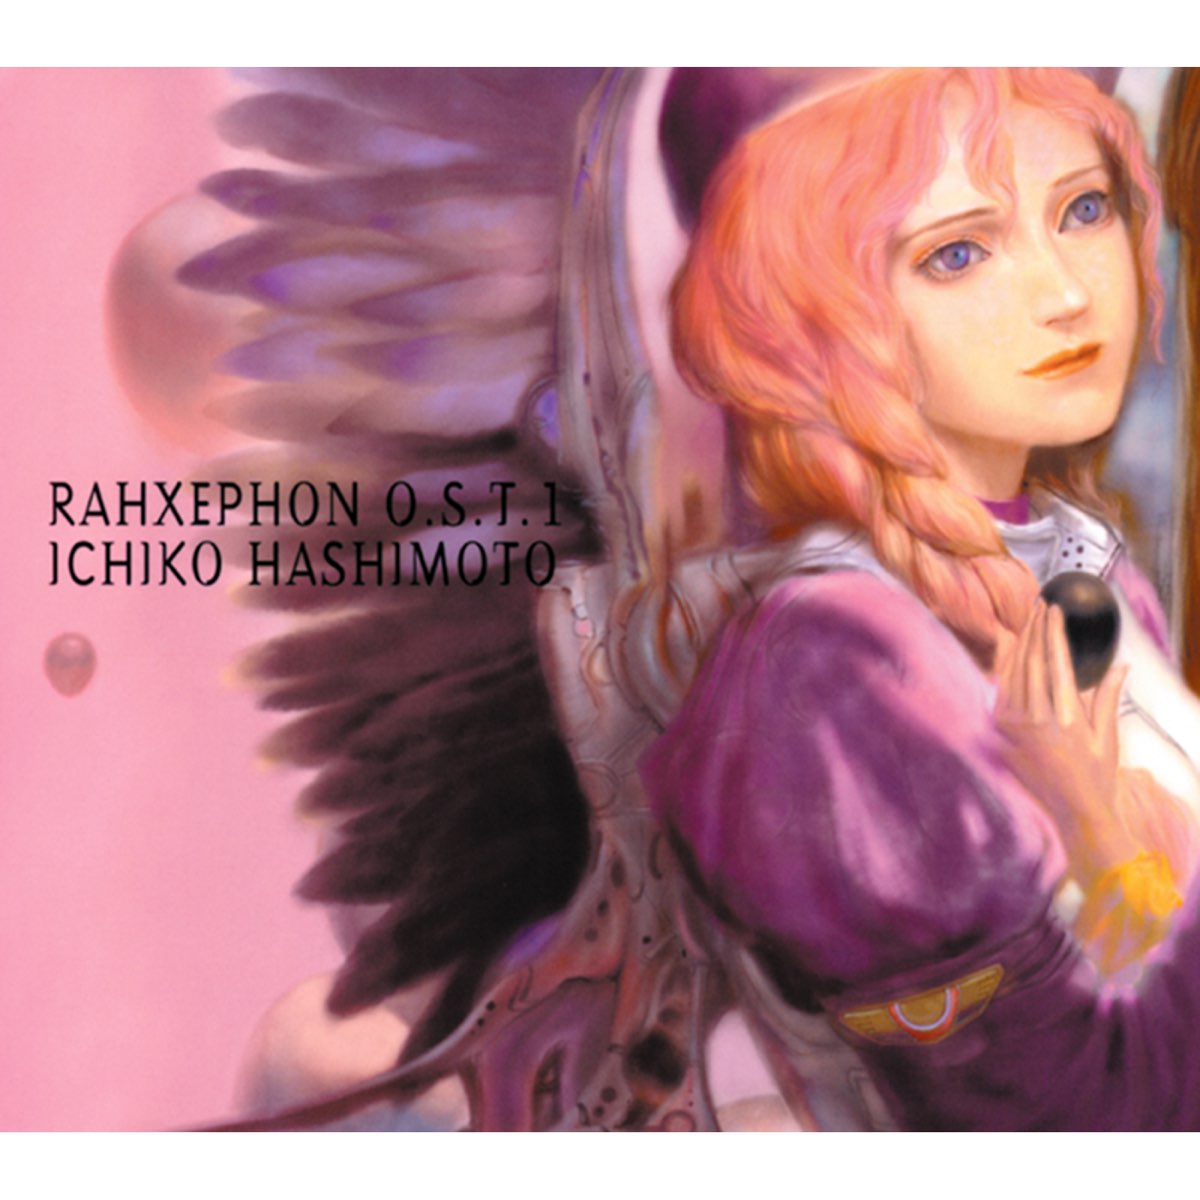 RahXephon Opening (full) (Hemisphere - Maaya Sakamoto) 